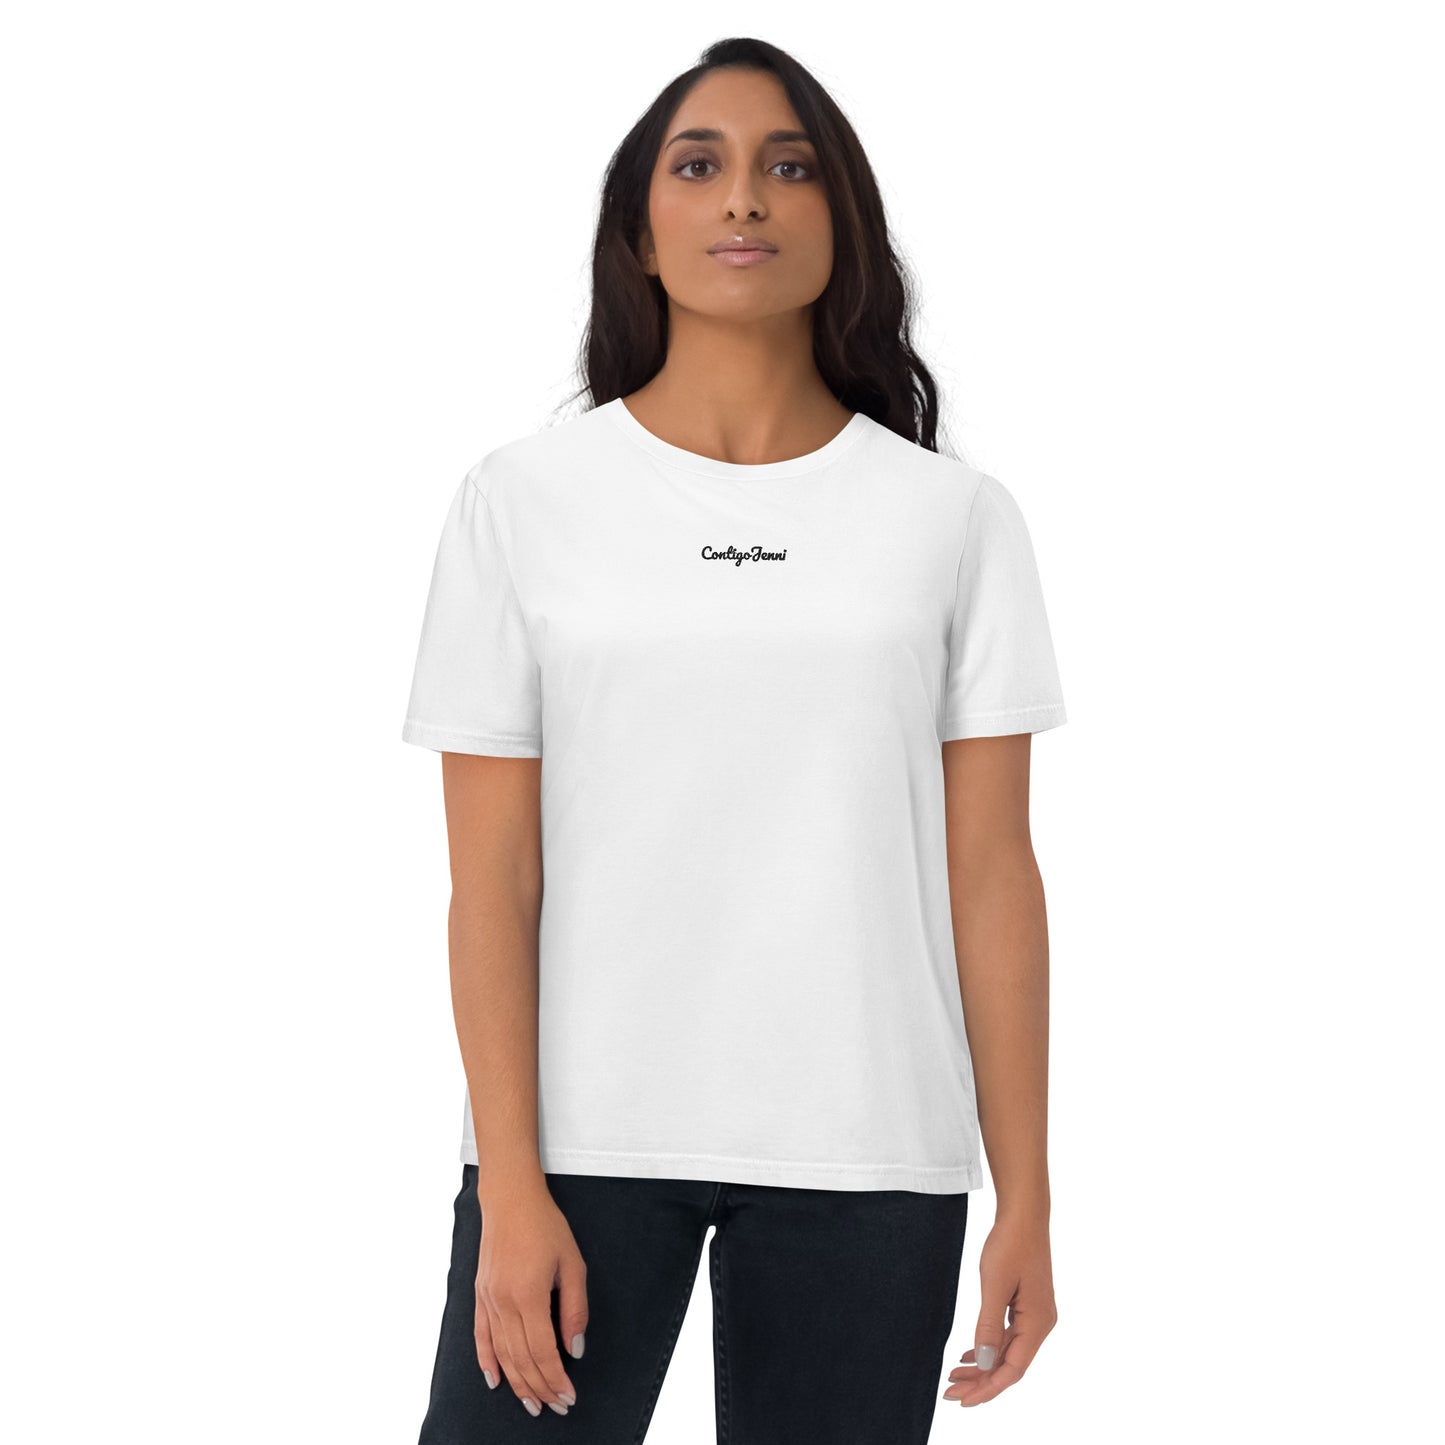 ContigoJenni -  Women supporting women. Jenni Hermoso - White organic cotton T-shirt.